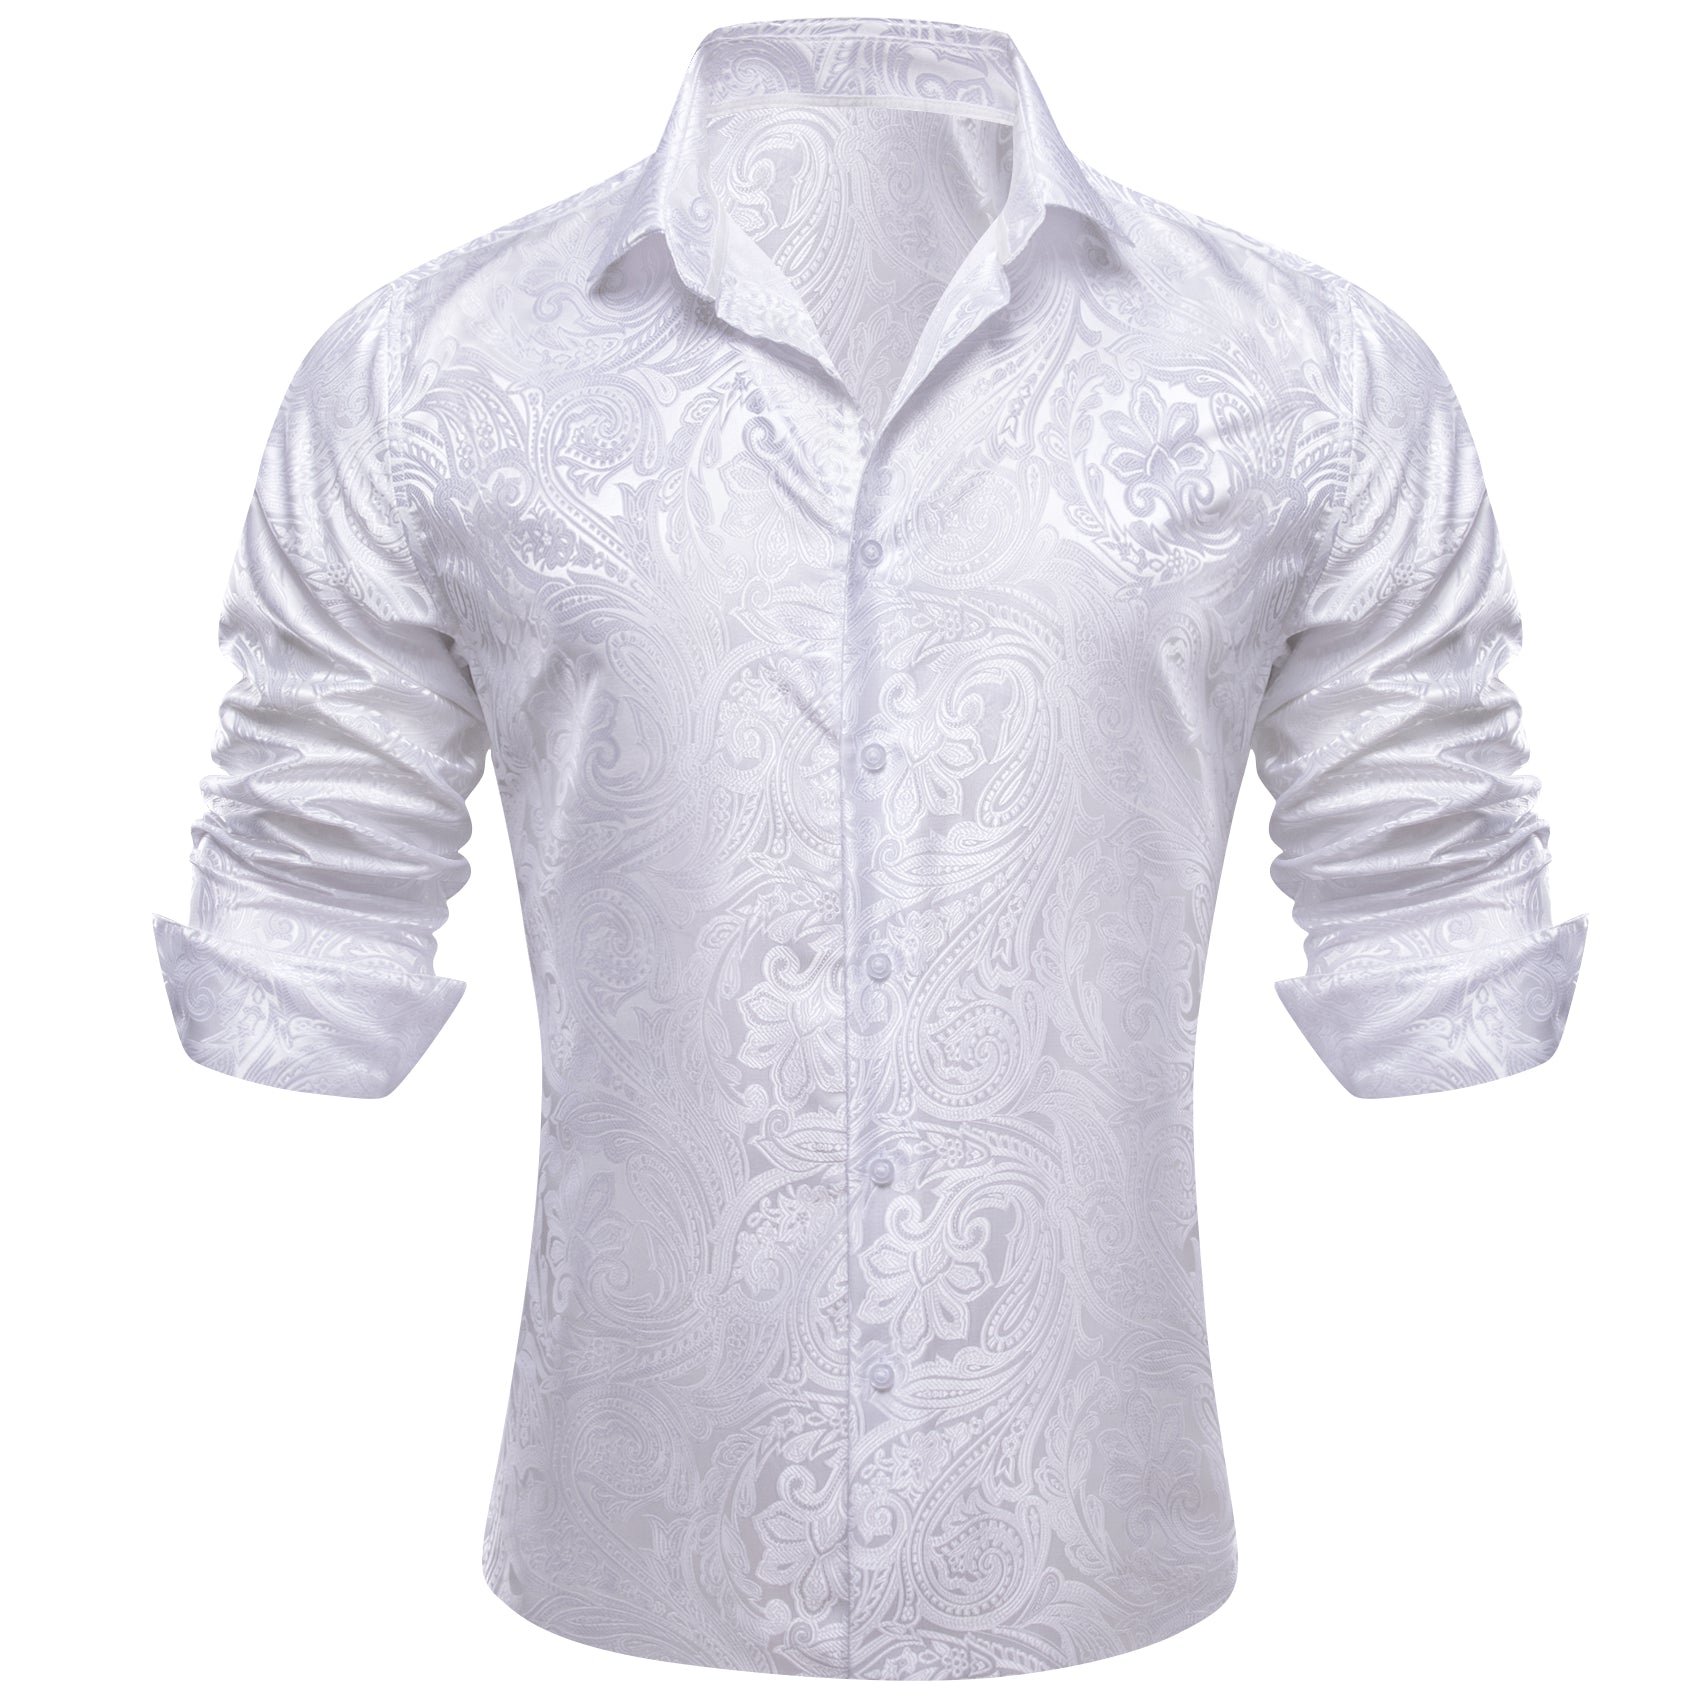 Barry.wang Classy White Paisley Silk Men's Shirt